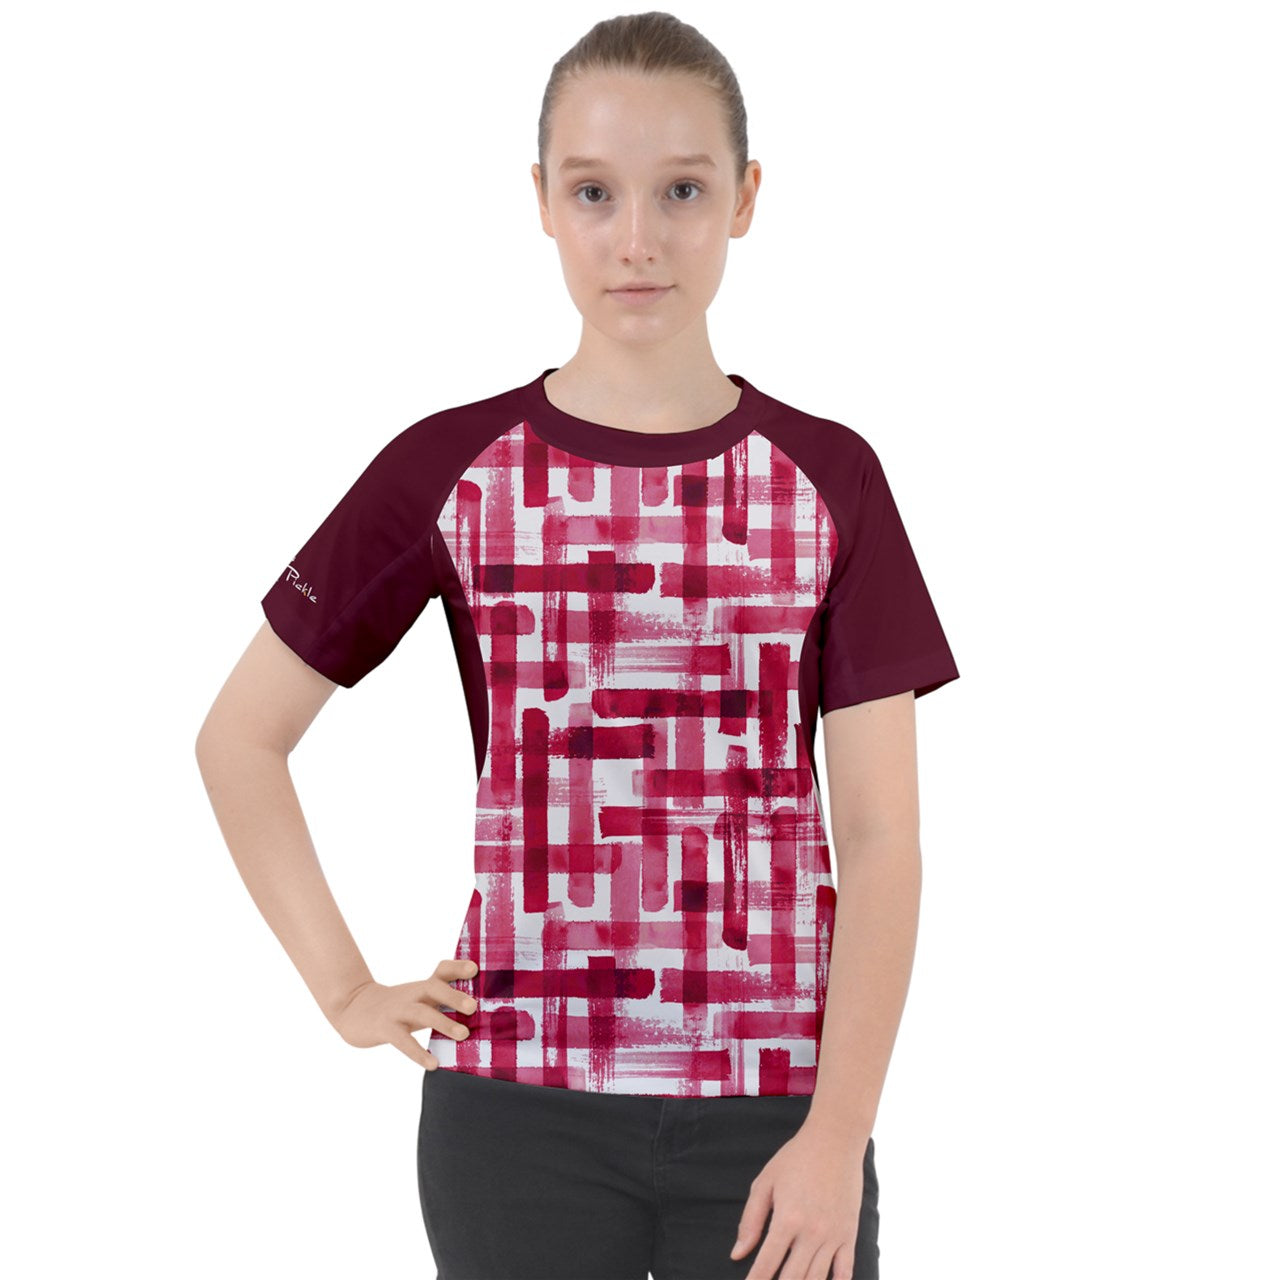 Heidi - RW - Weave - Women's Pickleball Sport Raglan T-shirt by Dizzy Pickle